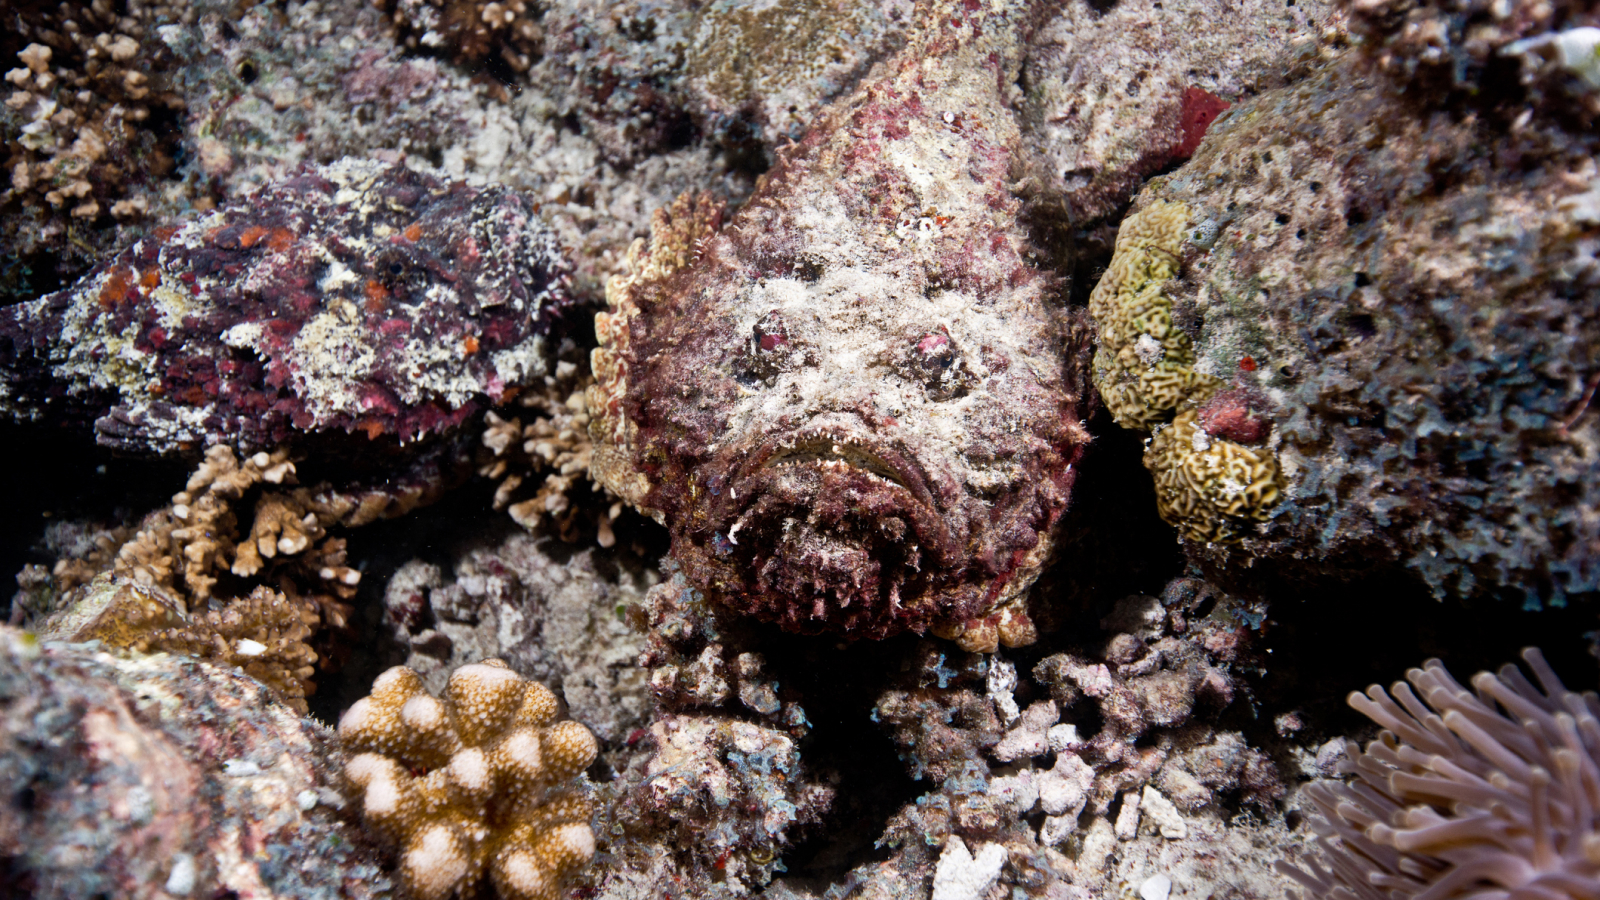 Stonefish hiding in dead coral.